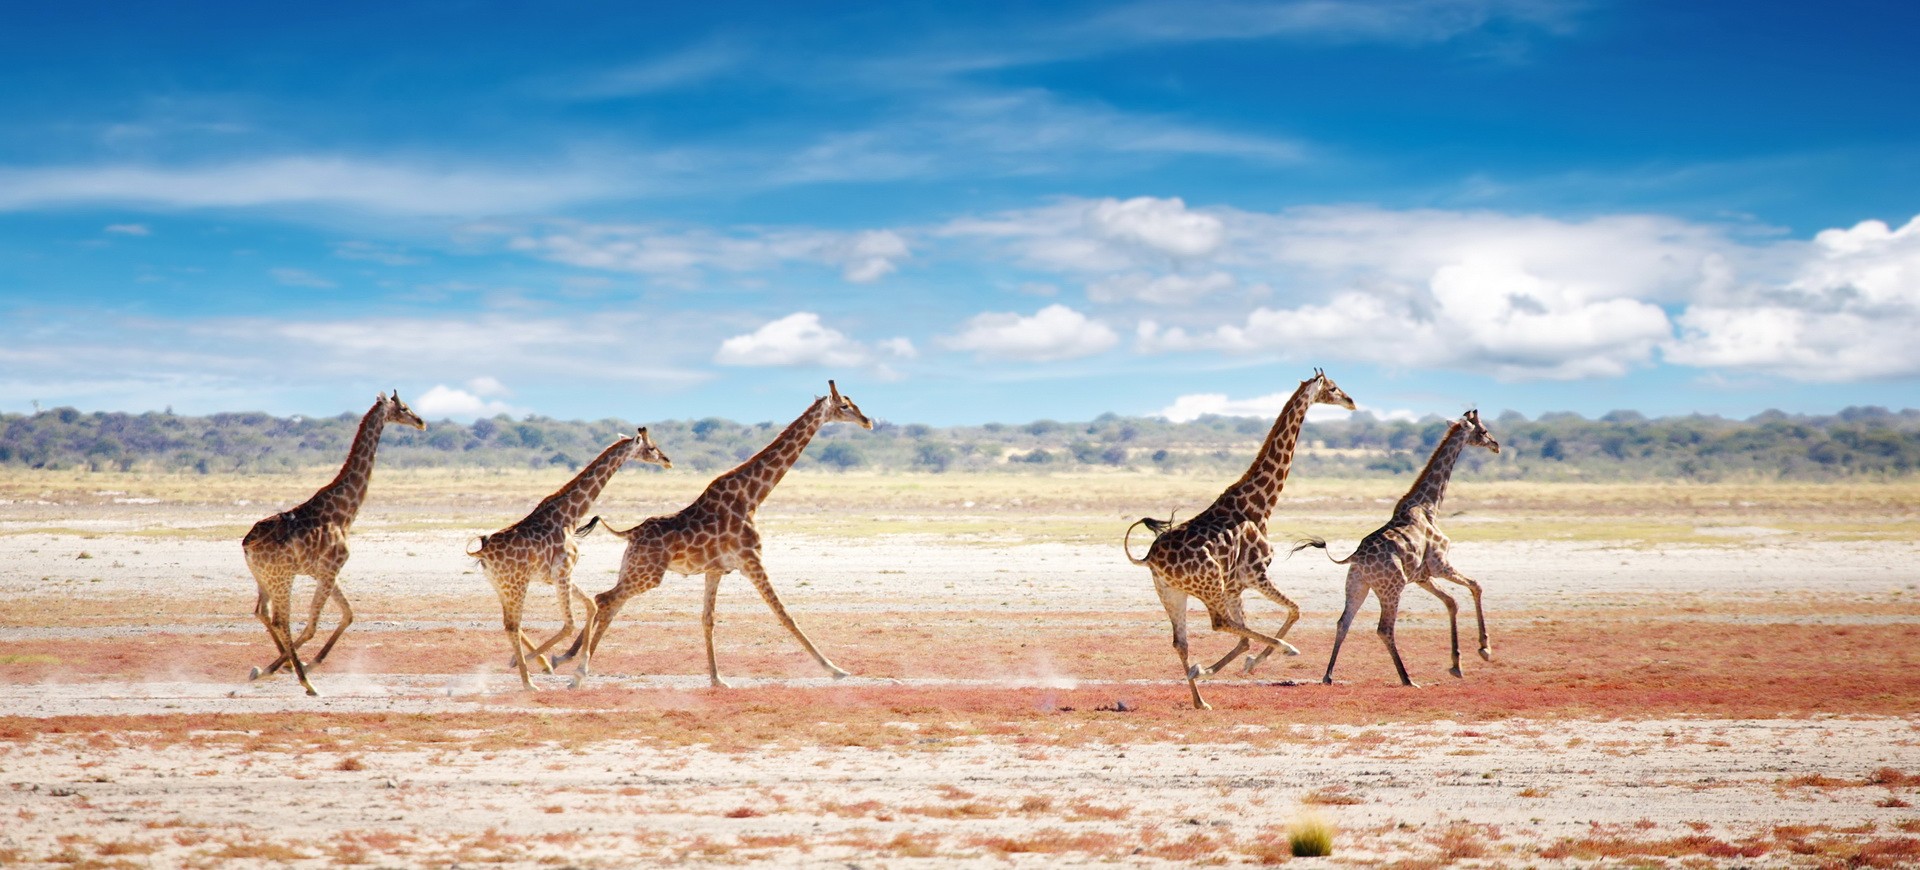 Namibie Etosha Girafes